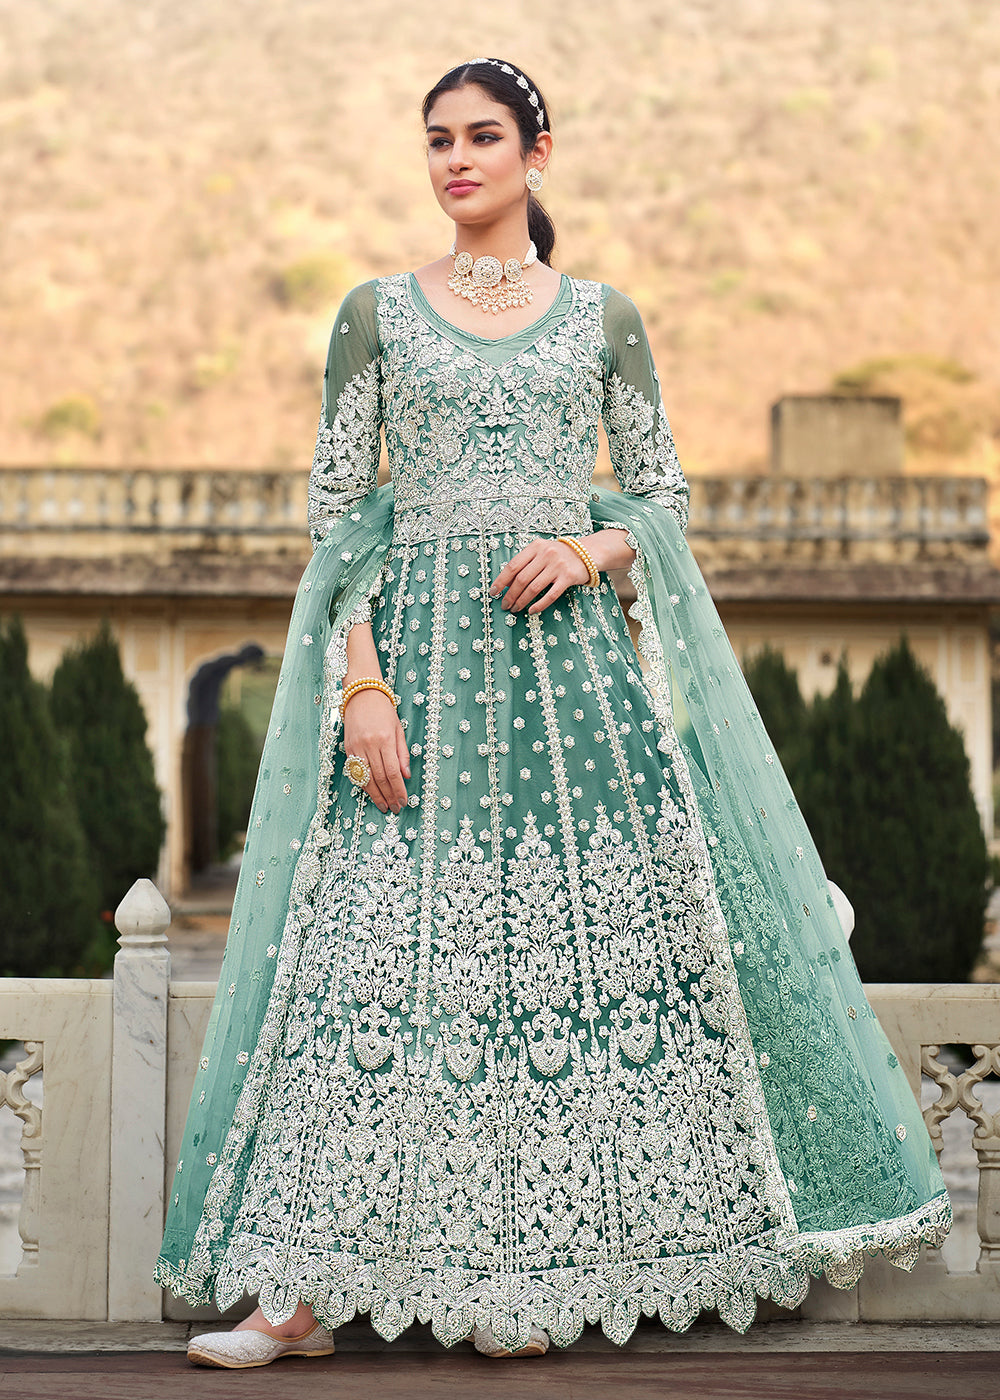 Designer Wedding Wear Heavy Bridal Anarkali Type Gown. at Rs 3000 | Wedding  Gown in Surat | ID: 18386138888